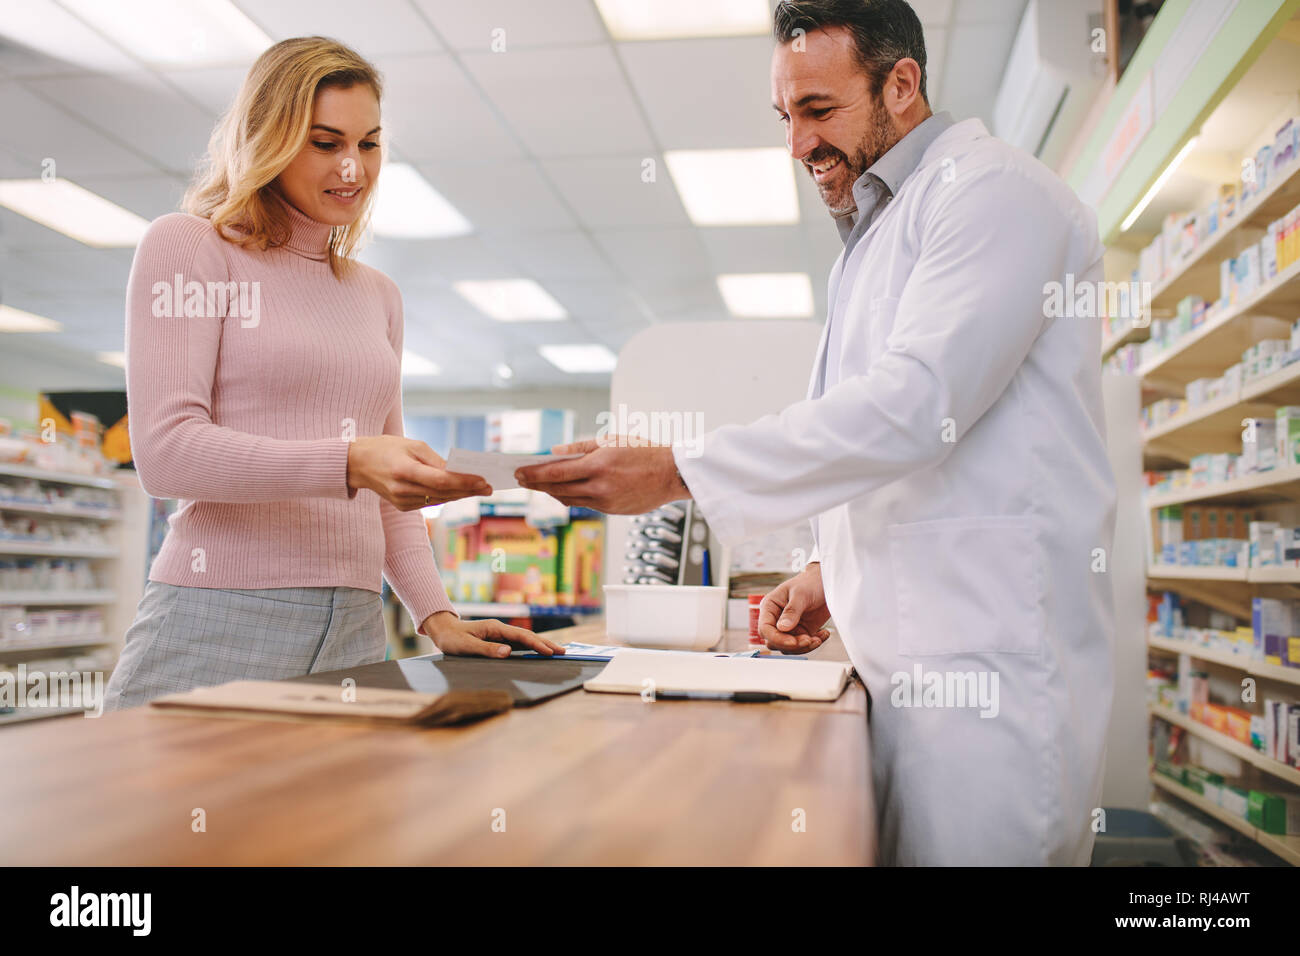 Male chemist taking prescription from female customer at pharmacy. Customer handing a medical prescription to the pharmacist standing behind counter. Stock Photo